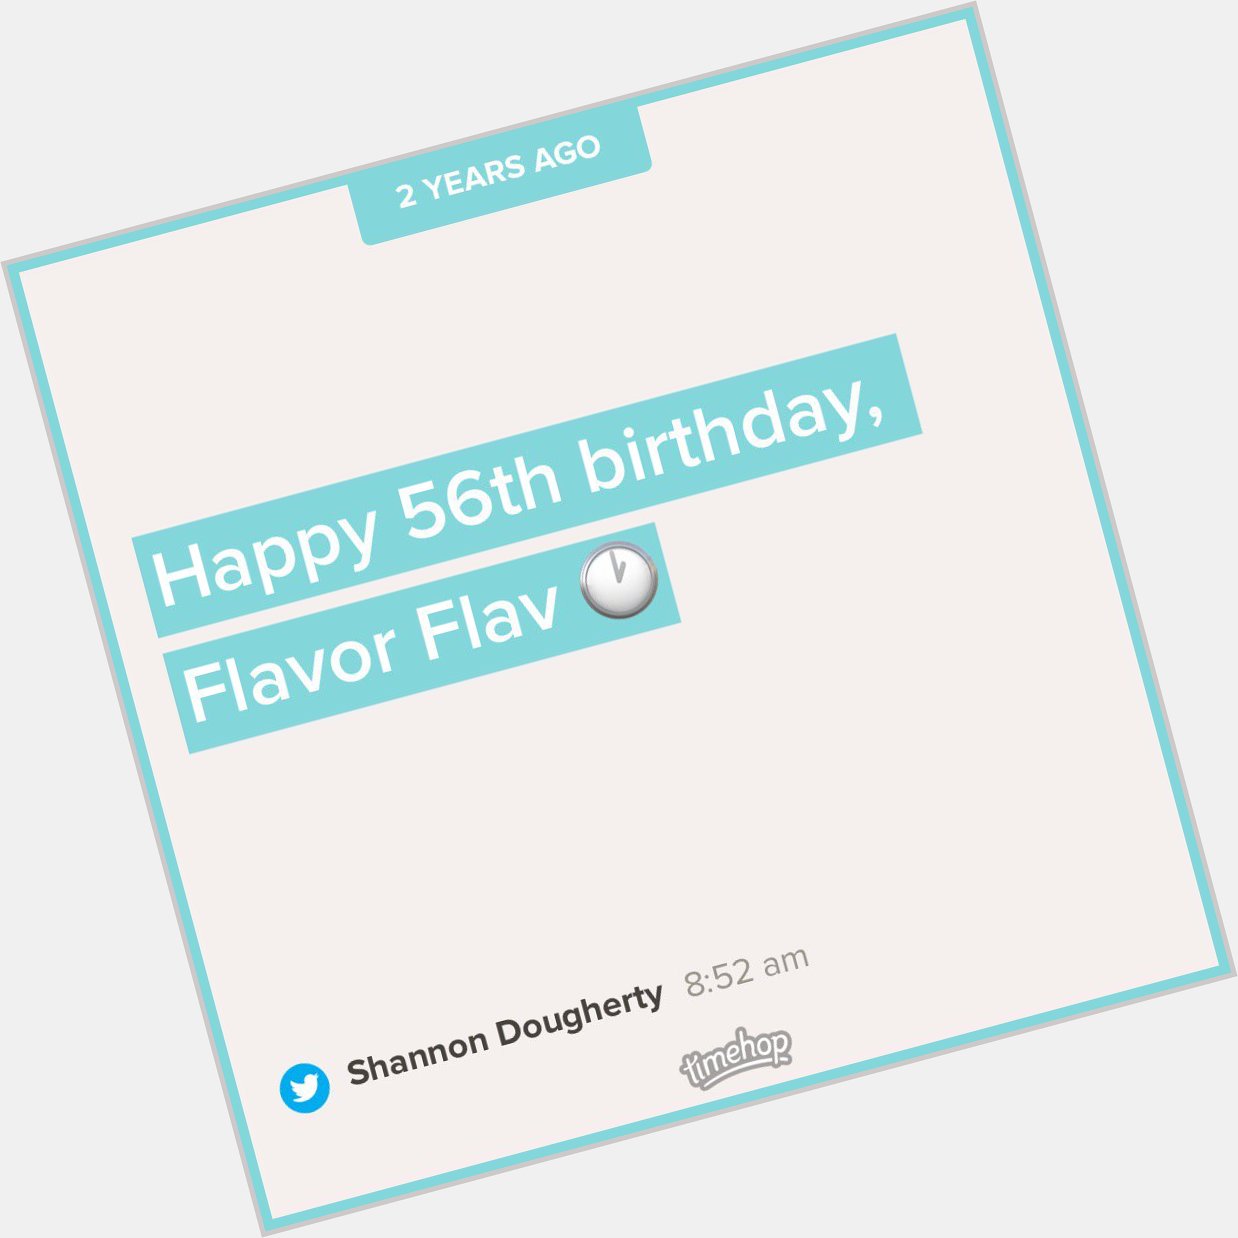 Happy 58th birthday, Flavor Flav! 